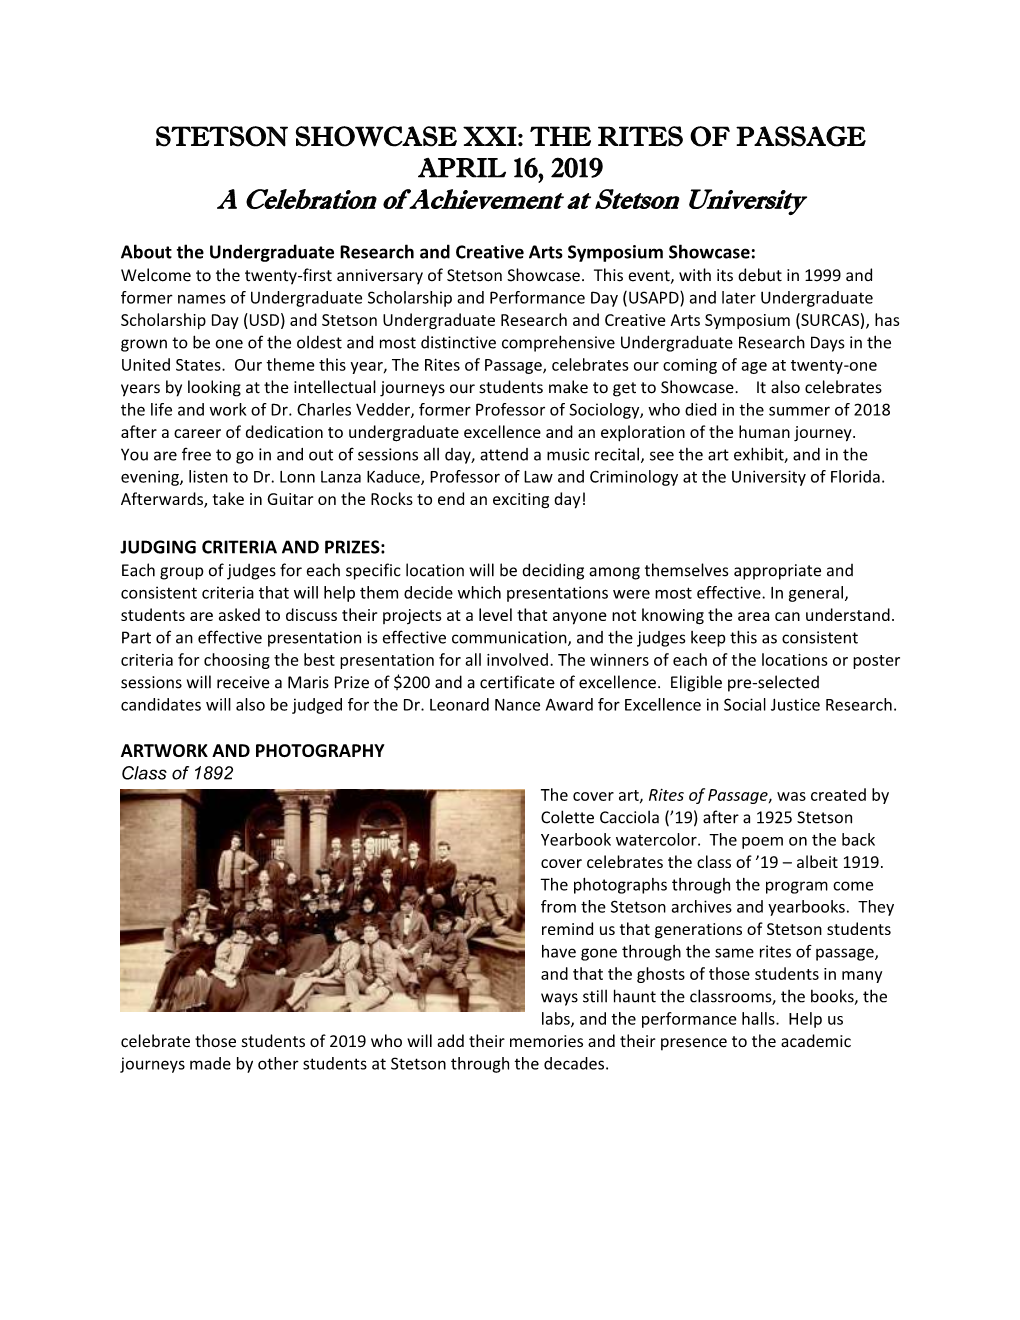 A Celebration of Achievement at Stetson University